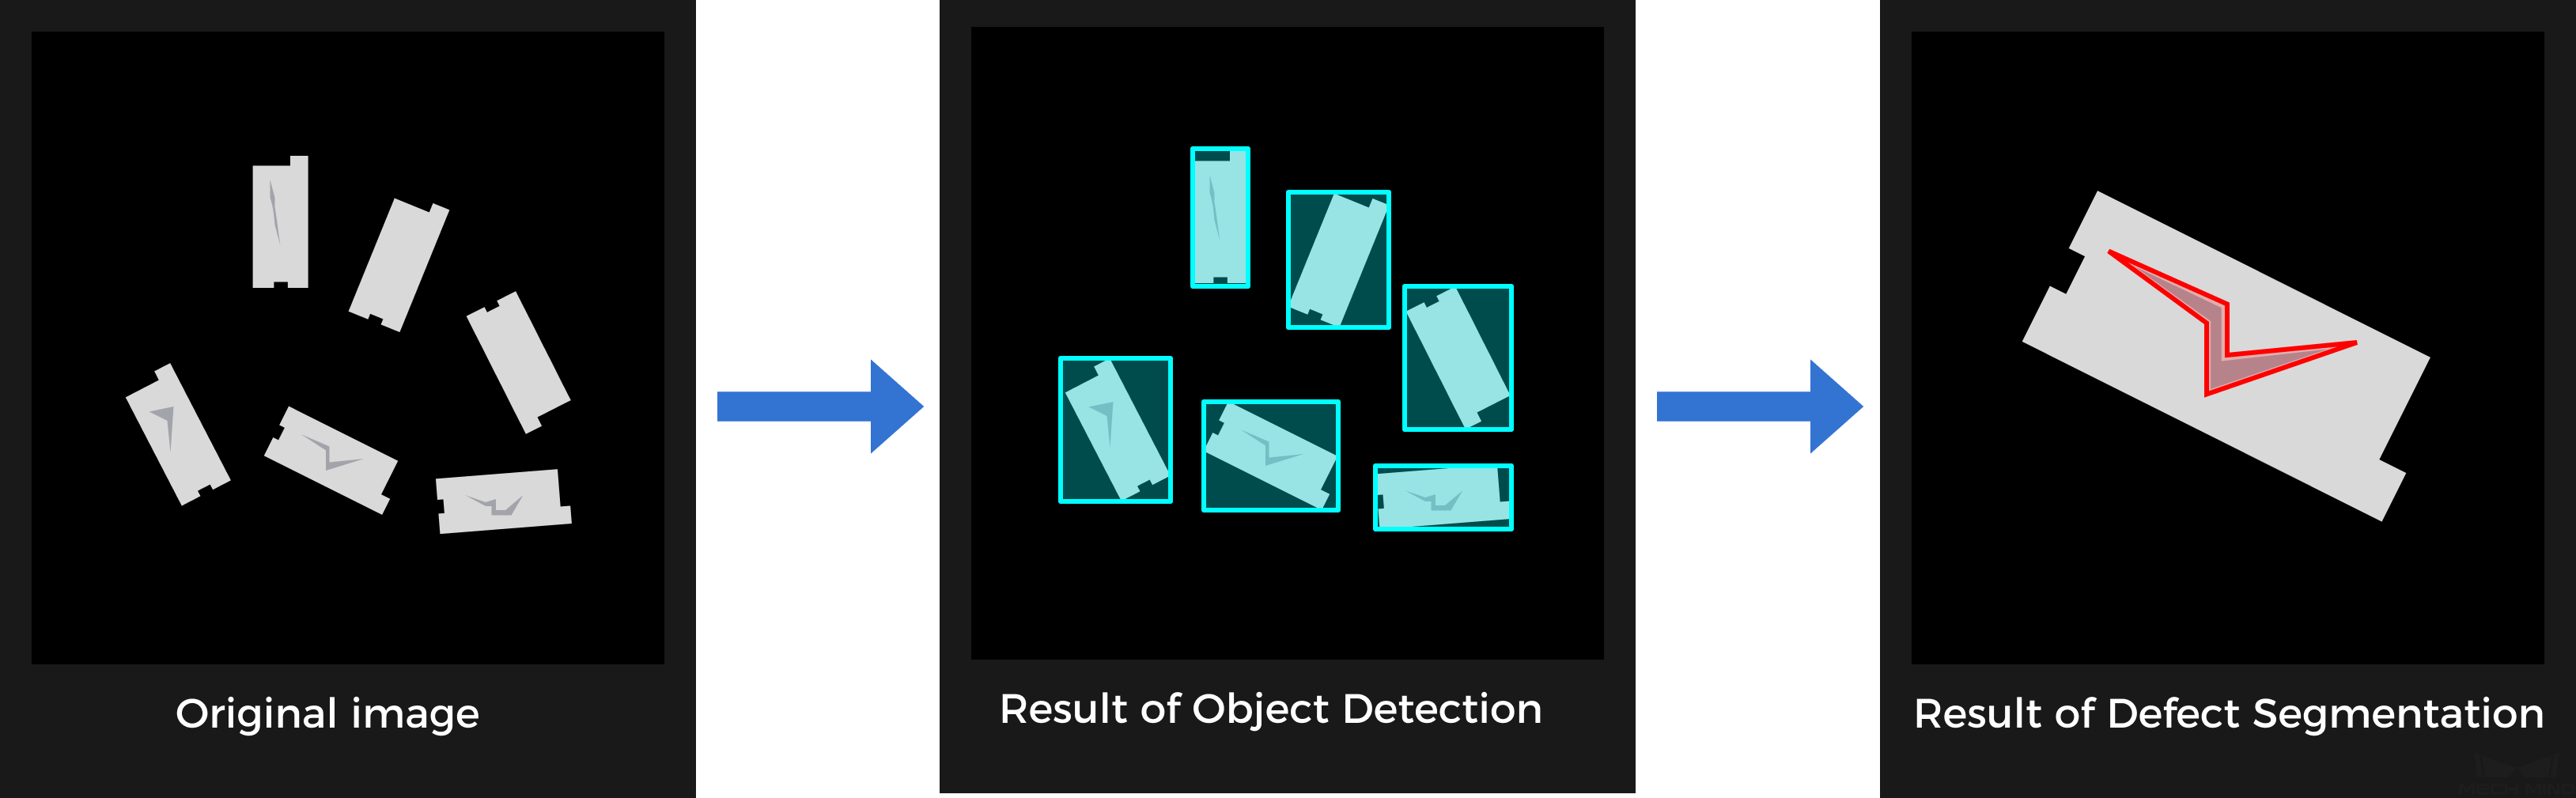 object defectseg example